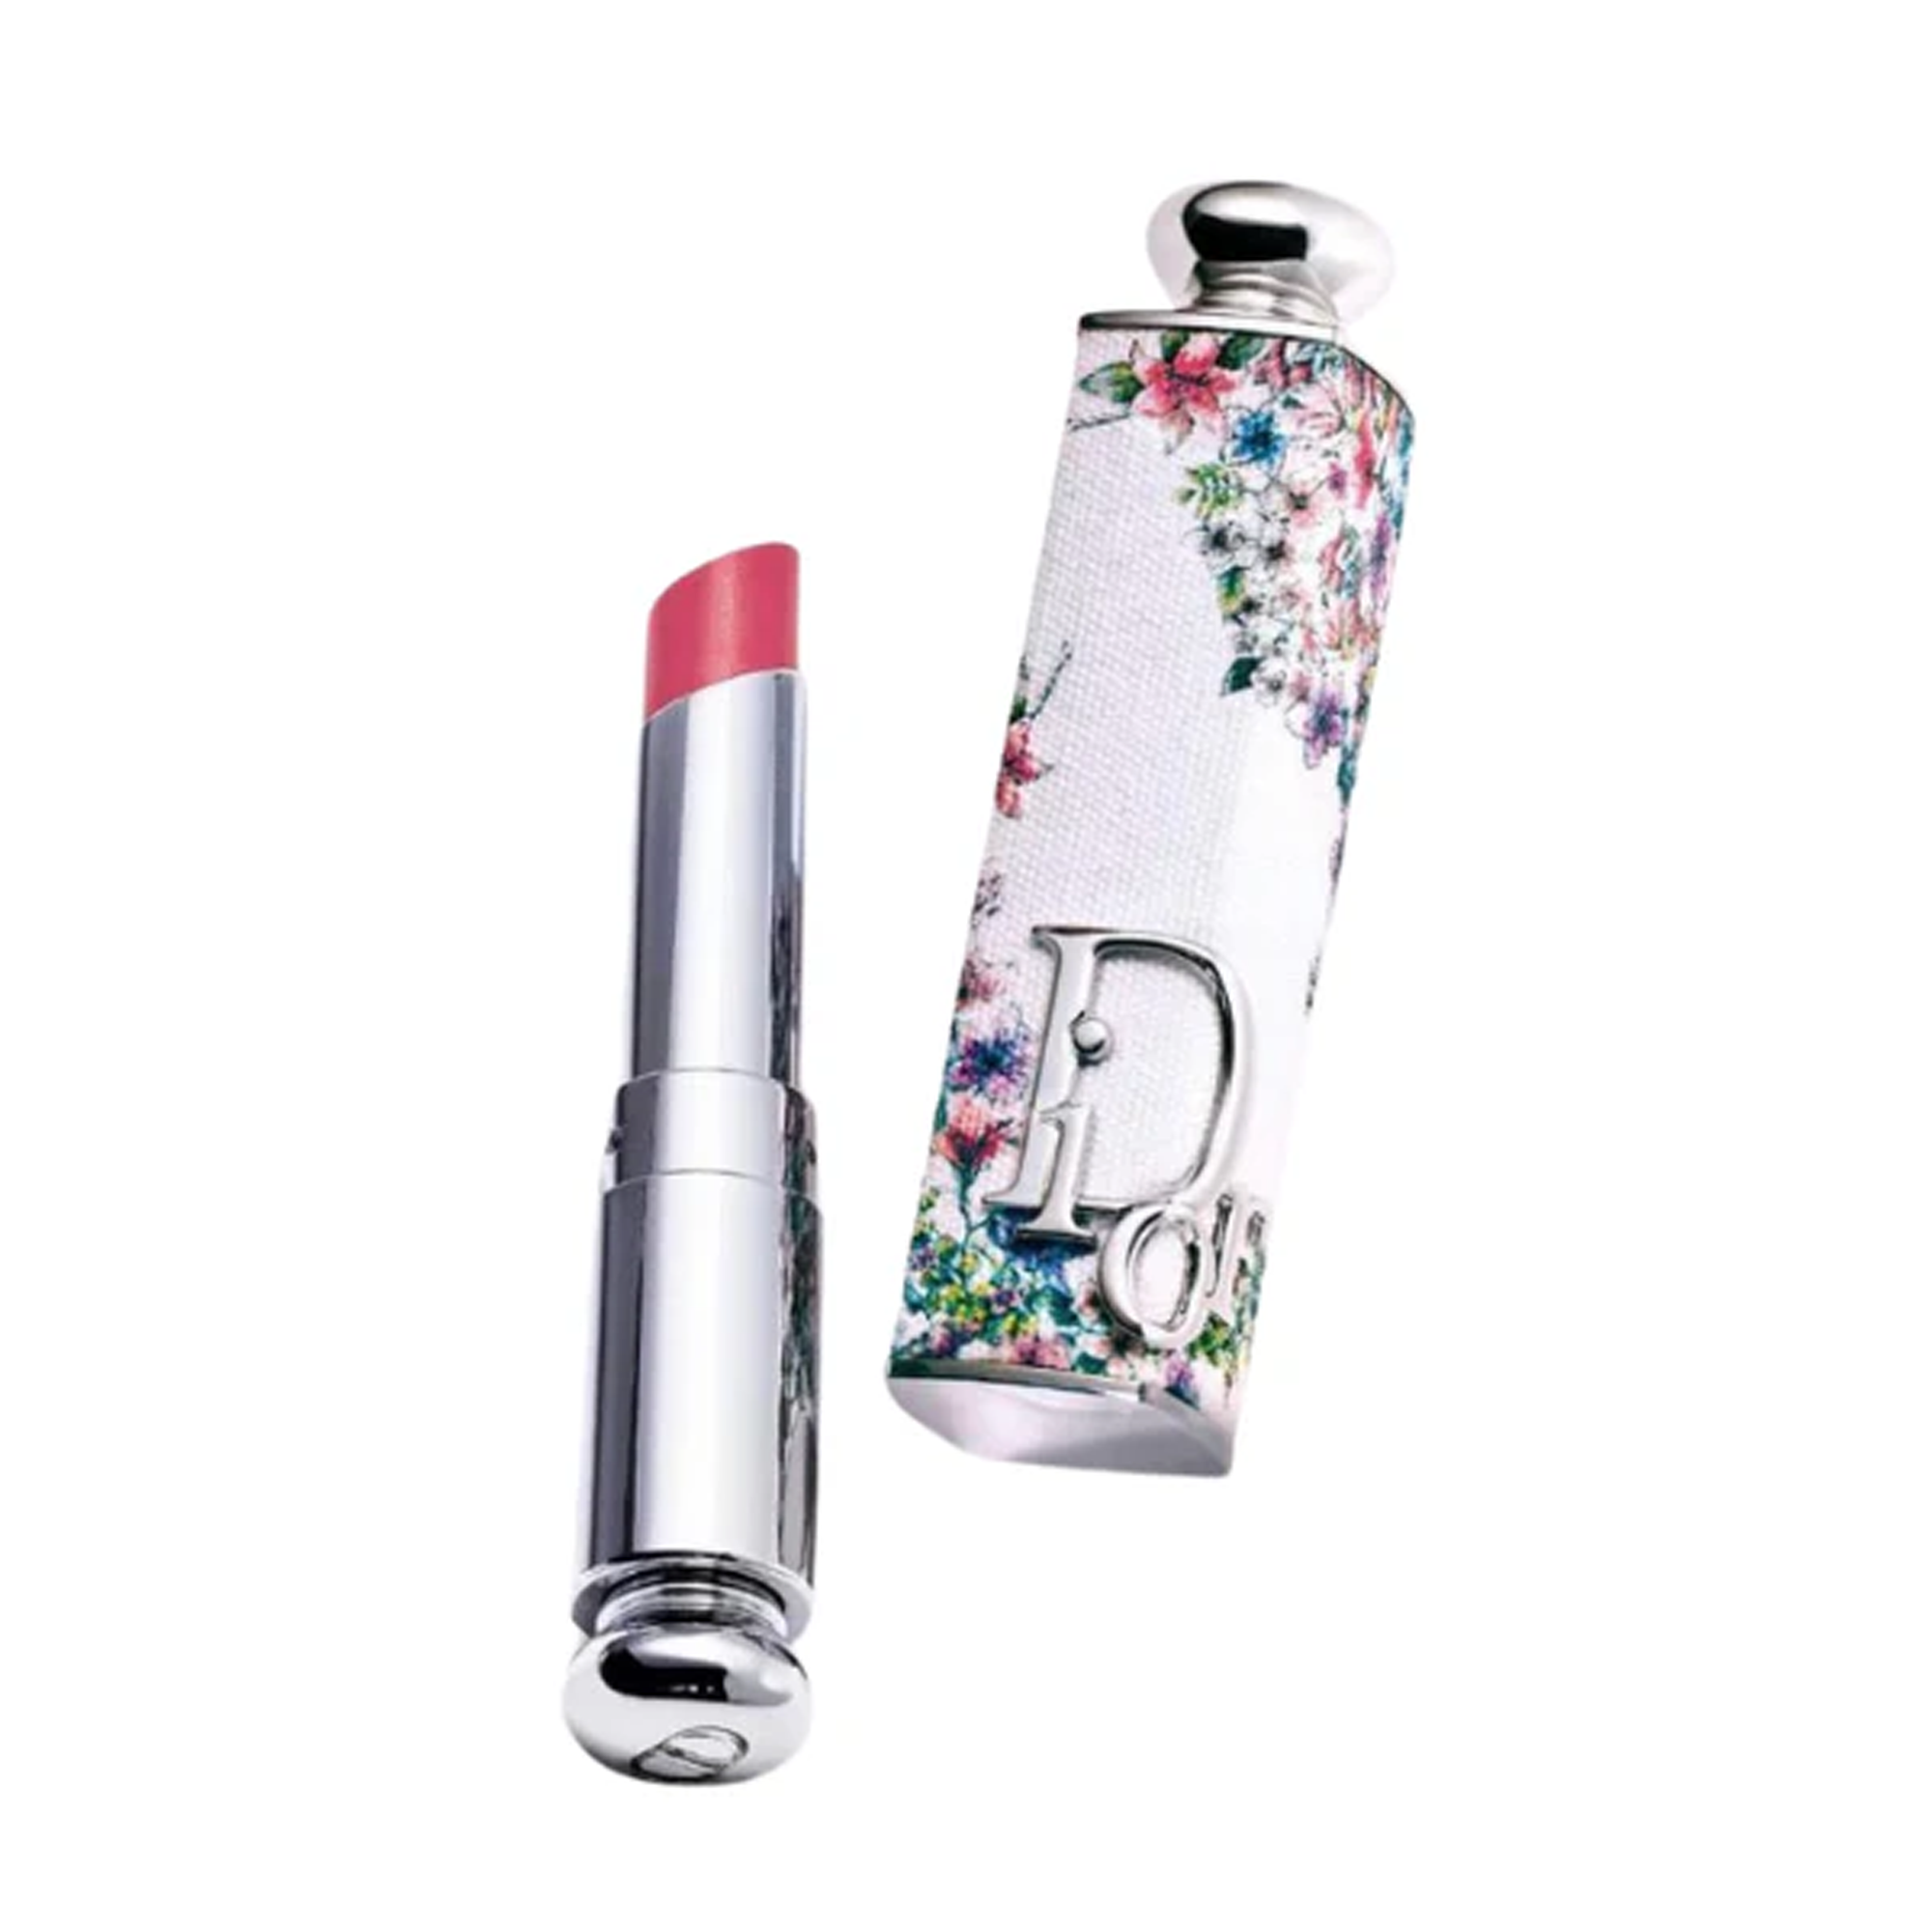 Dior Lipstick Look, Bundle & Save